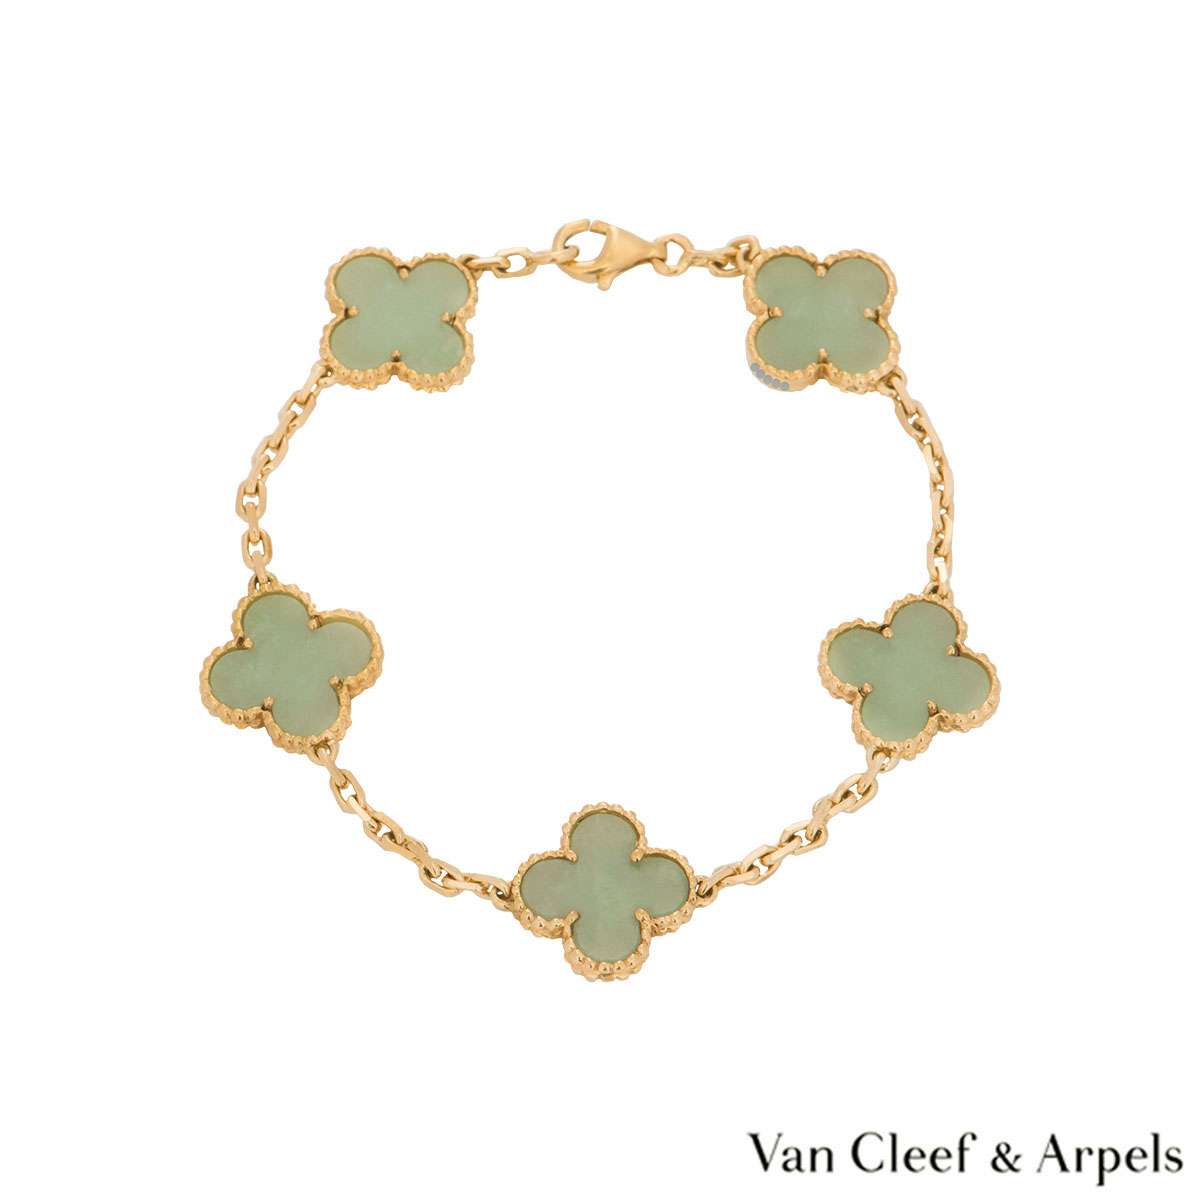 Van Cleef Inspired Bracelet